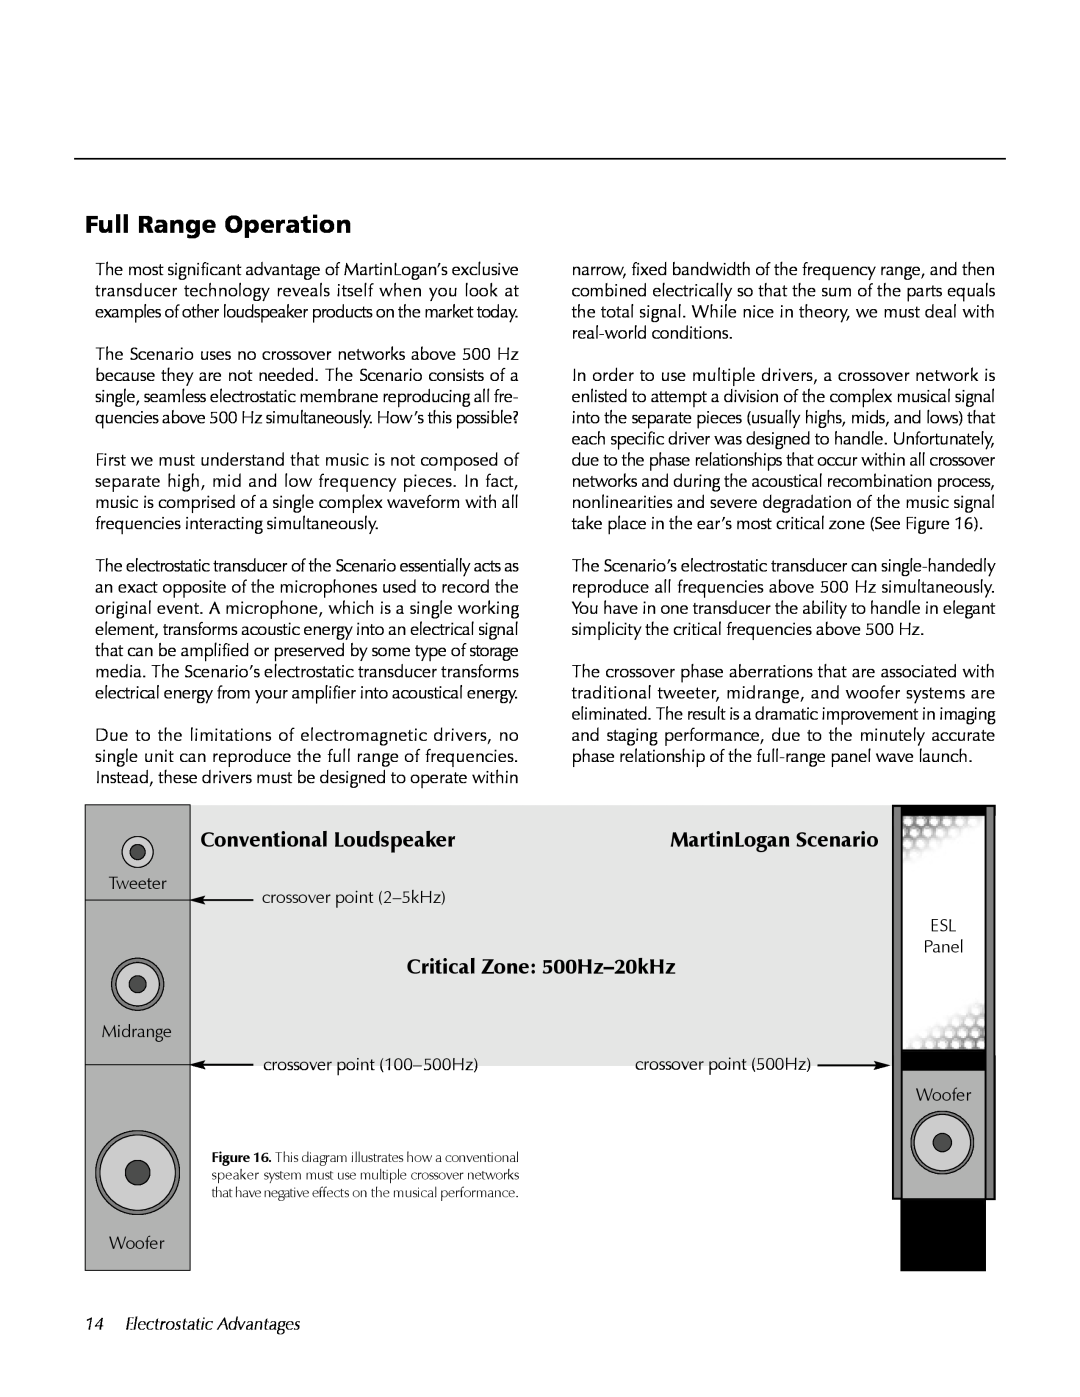 MartinLogan Loudspeaker Systems user manual Full Range Operation, Conventional Loudspeaker, MartinLogan Scenario 